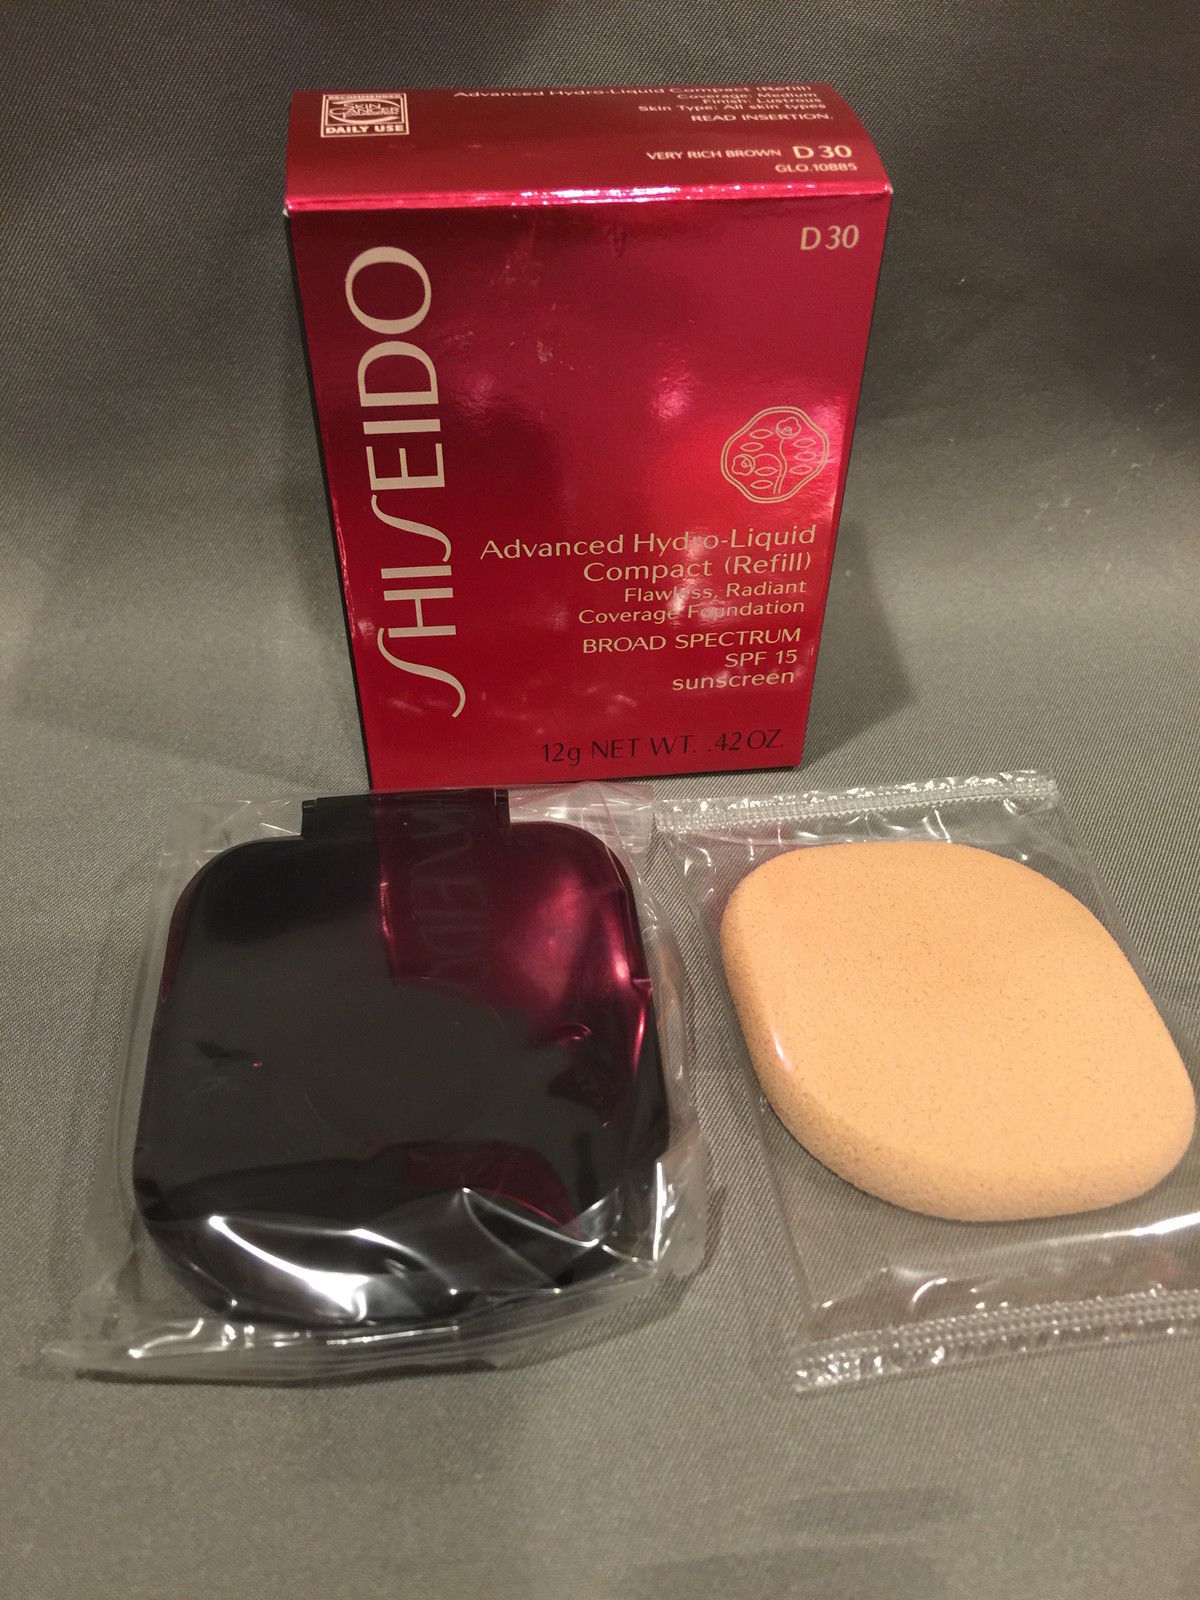 24 x NIB Shiseido Advanced Hydro-Liquid Compact Refill D30 Wholesale Lot - $168.30